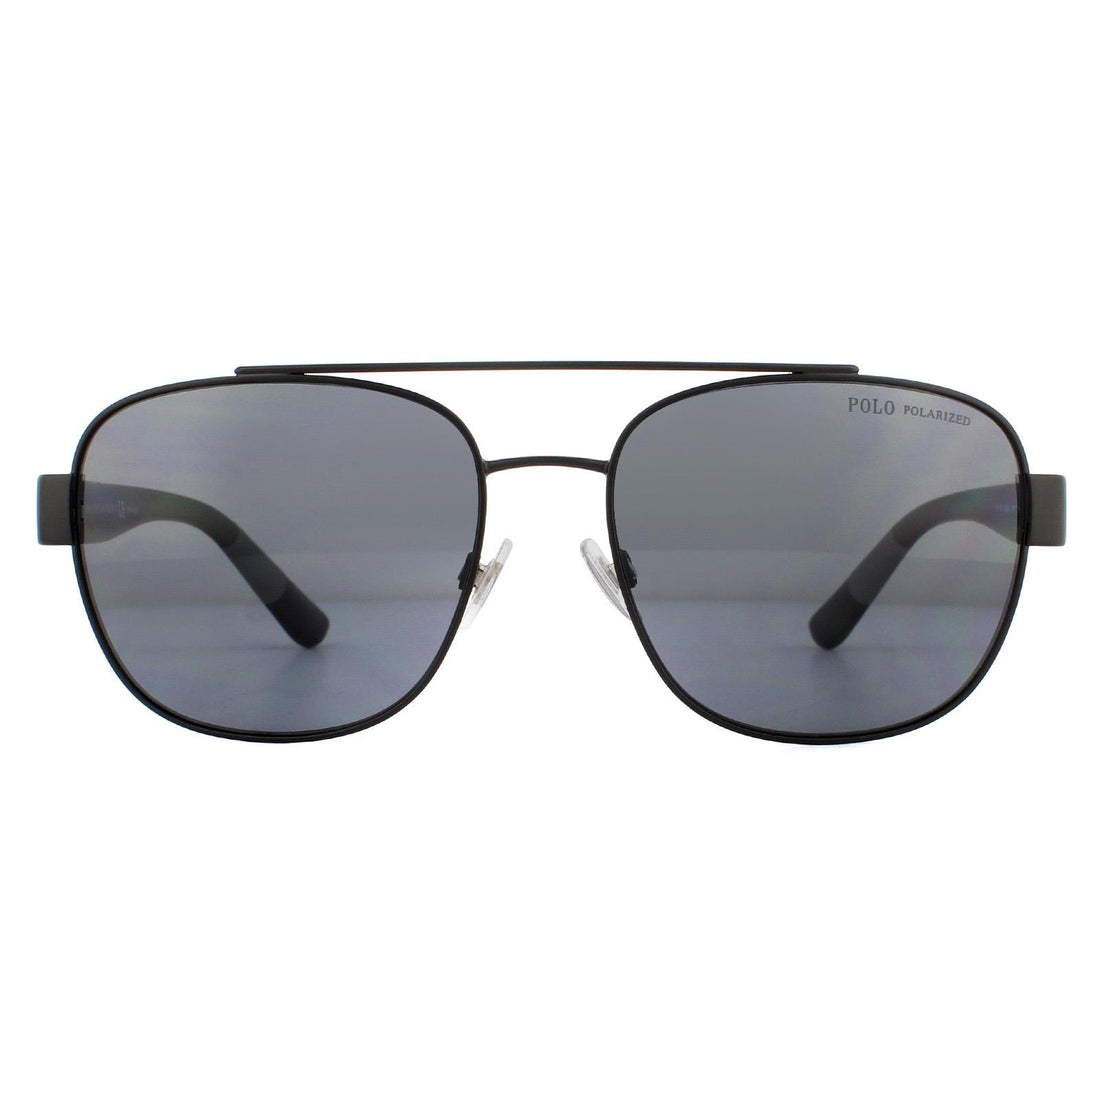 Polo Ralph Lauren PH3119 Sunglasses Matte Black / Grey Polarized